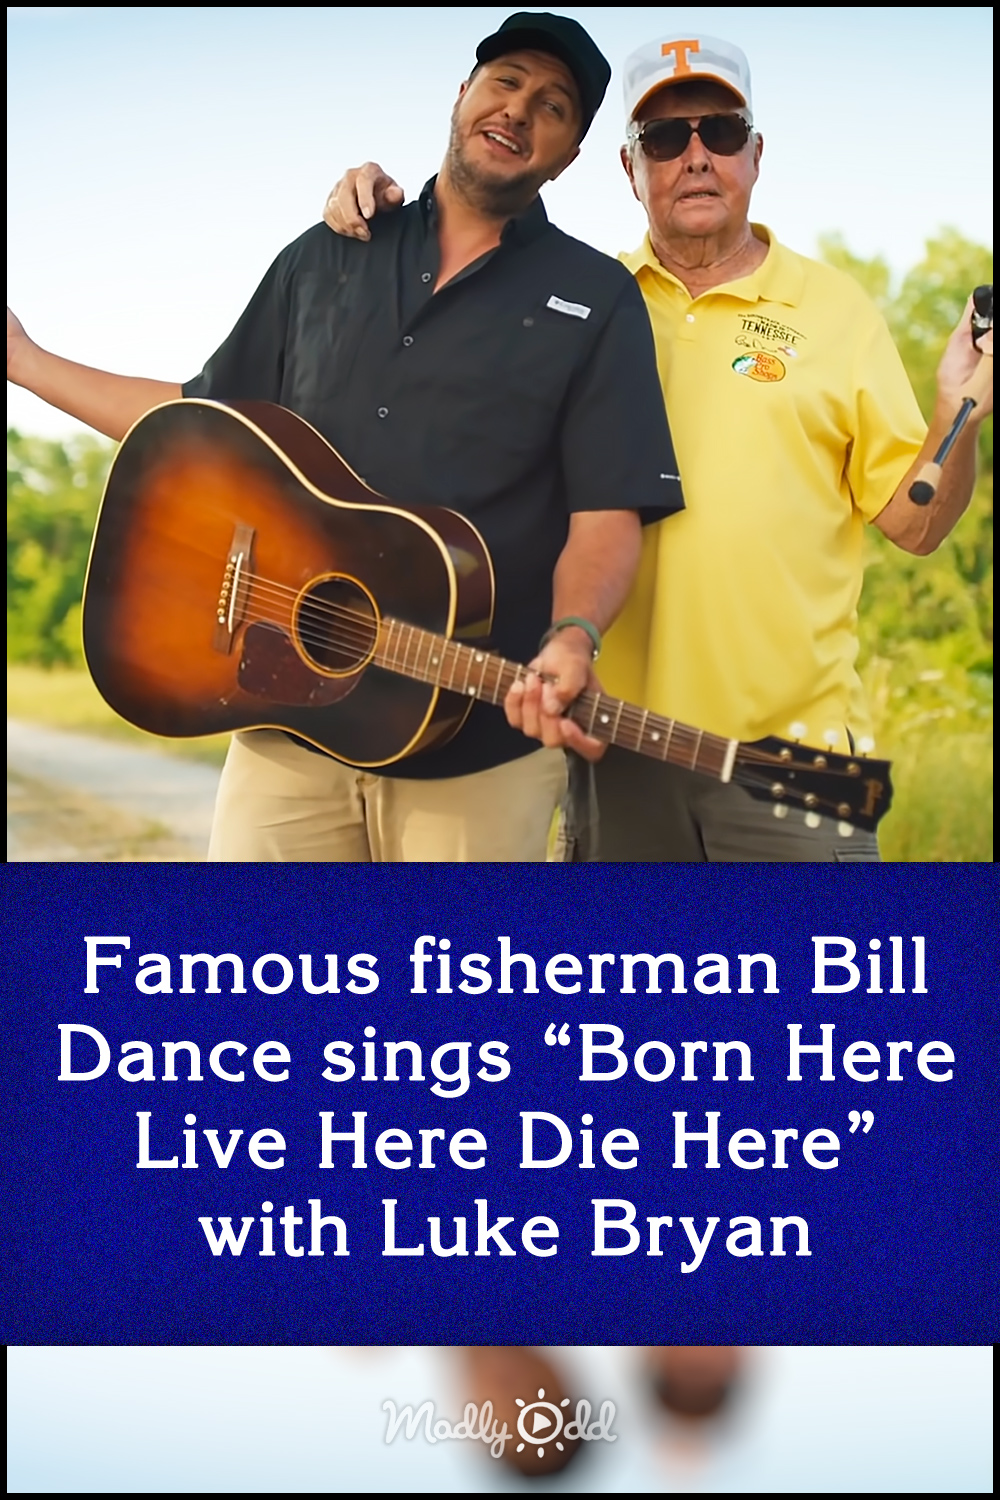 Famous fisherman Bill Dance sings “Born Here Live Here Die Here” with Luke Bryan